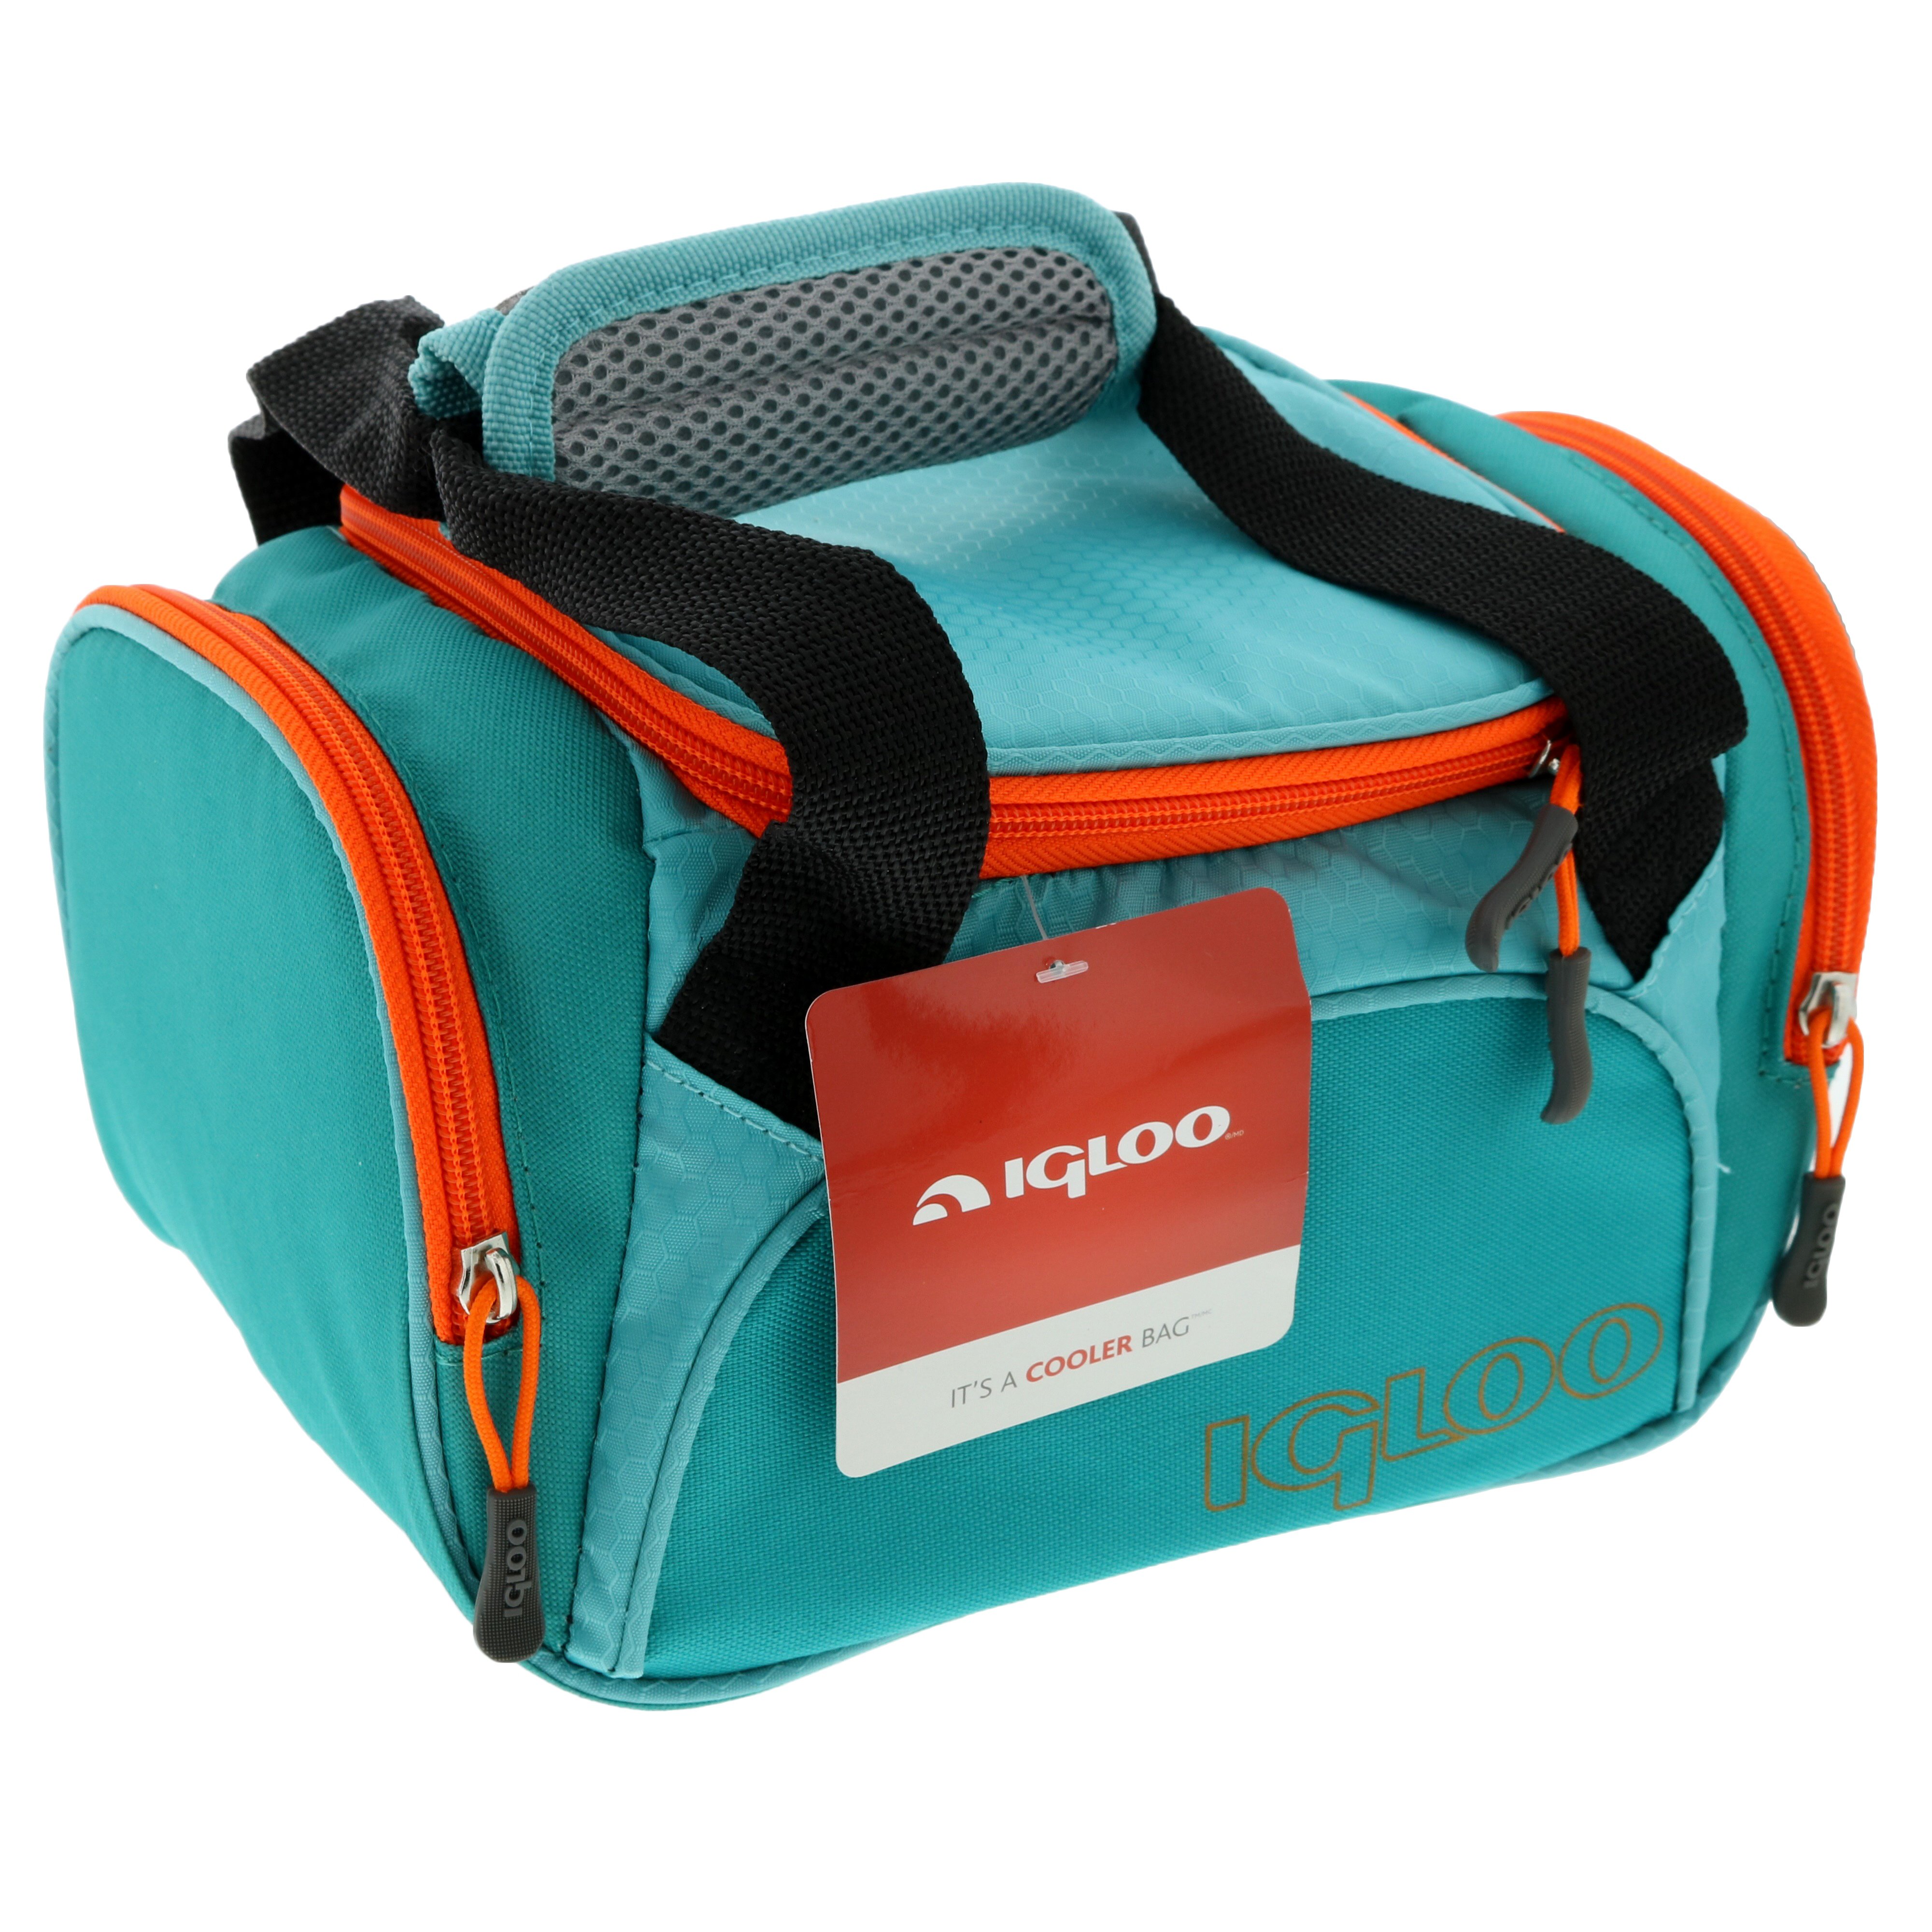 Igloo Small Duffel Cooler Bag, Assorted Colors